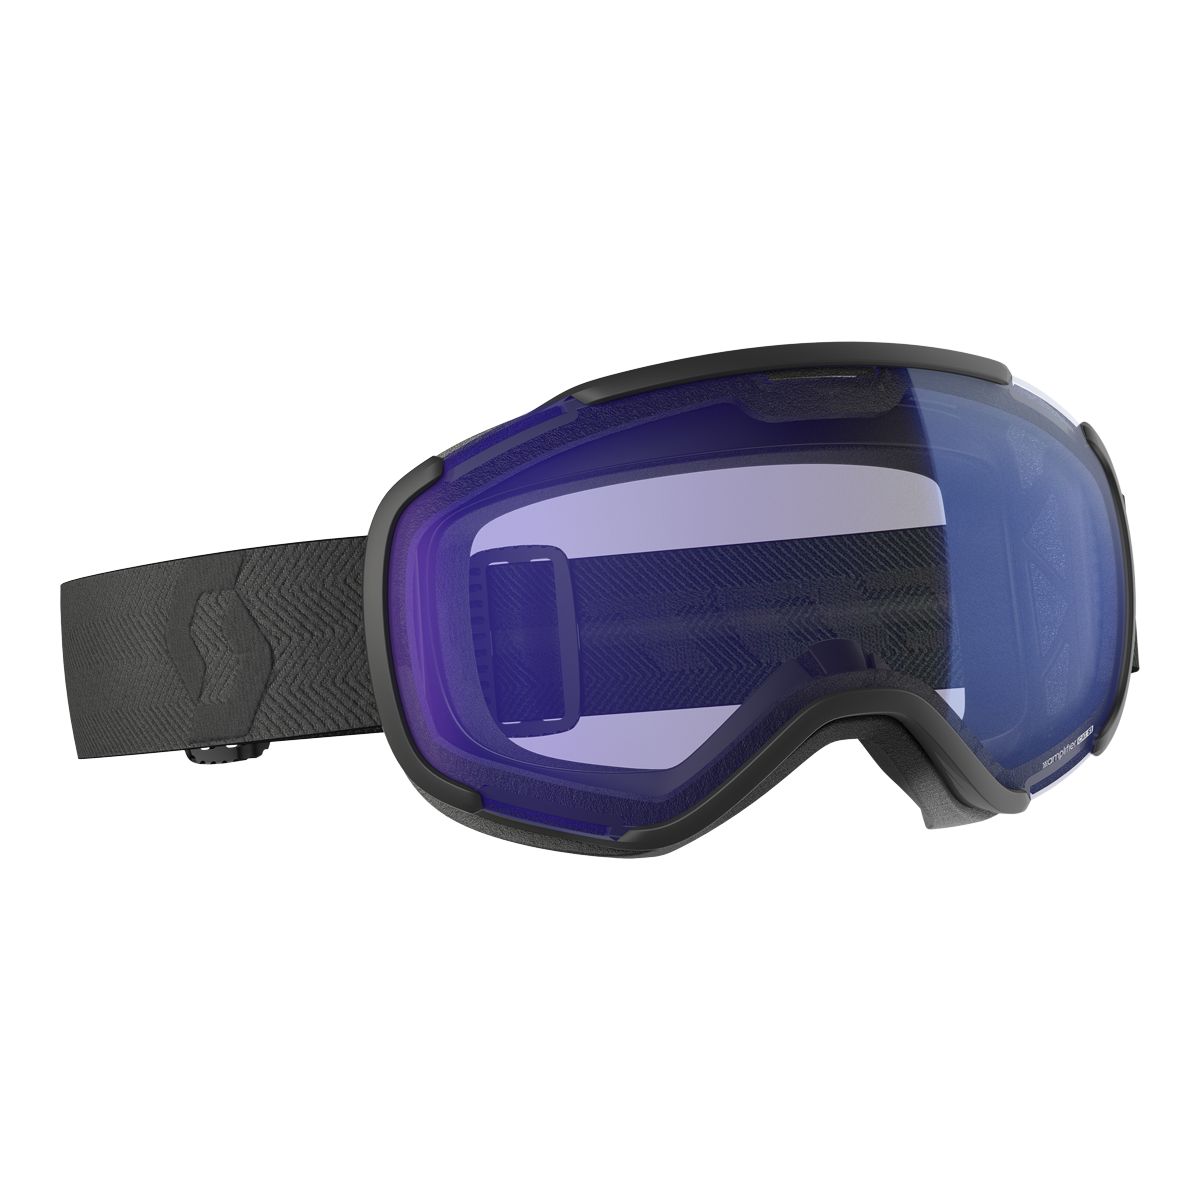 Scott Faze II Ski & Snowboard Goggles 2018/19 - Black with Blue Chrome Lens